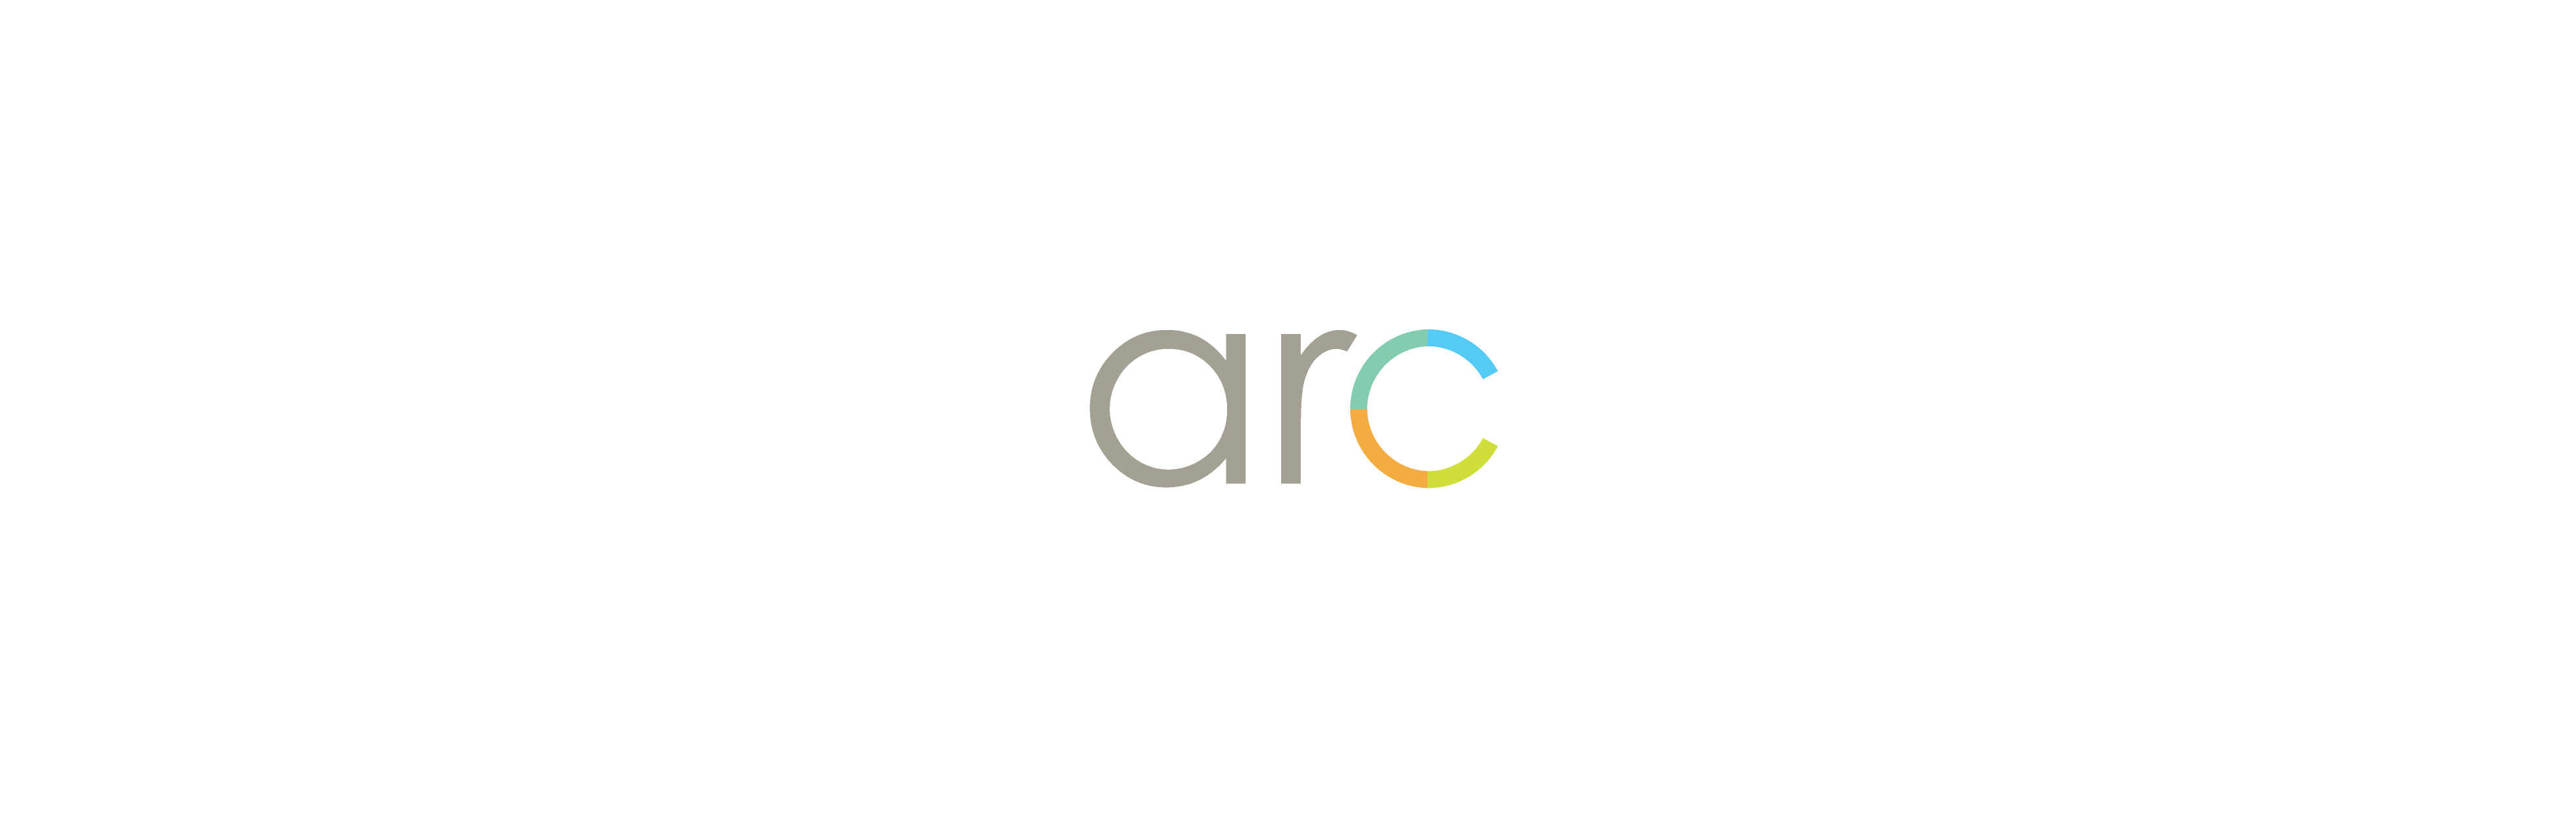 New Process Logo - Evolution of the Arc logo: Designing for a new brand | USGBC Studio